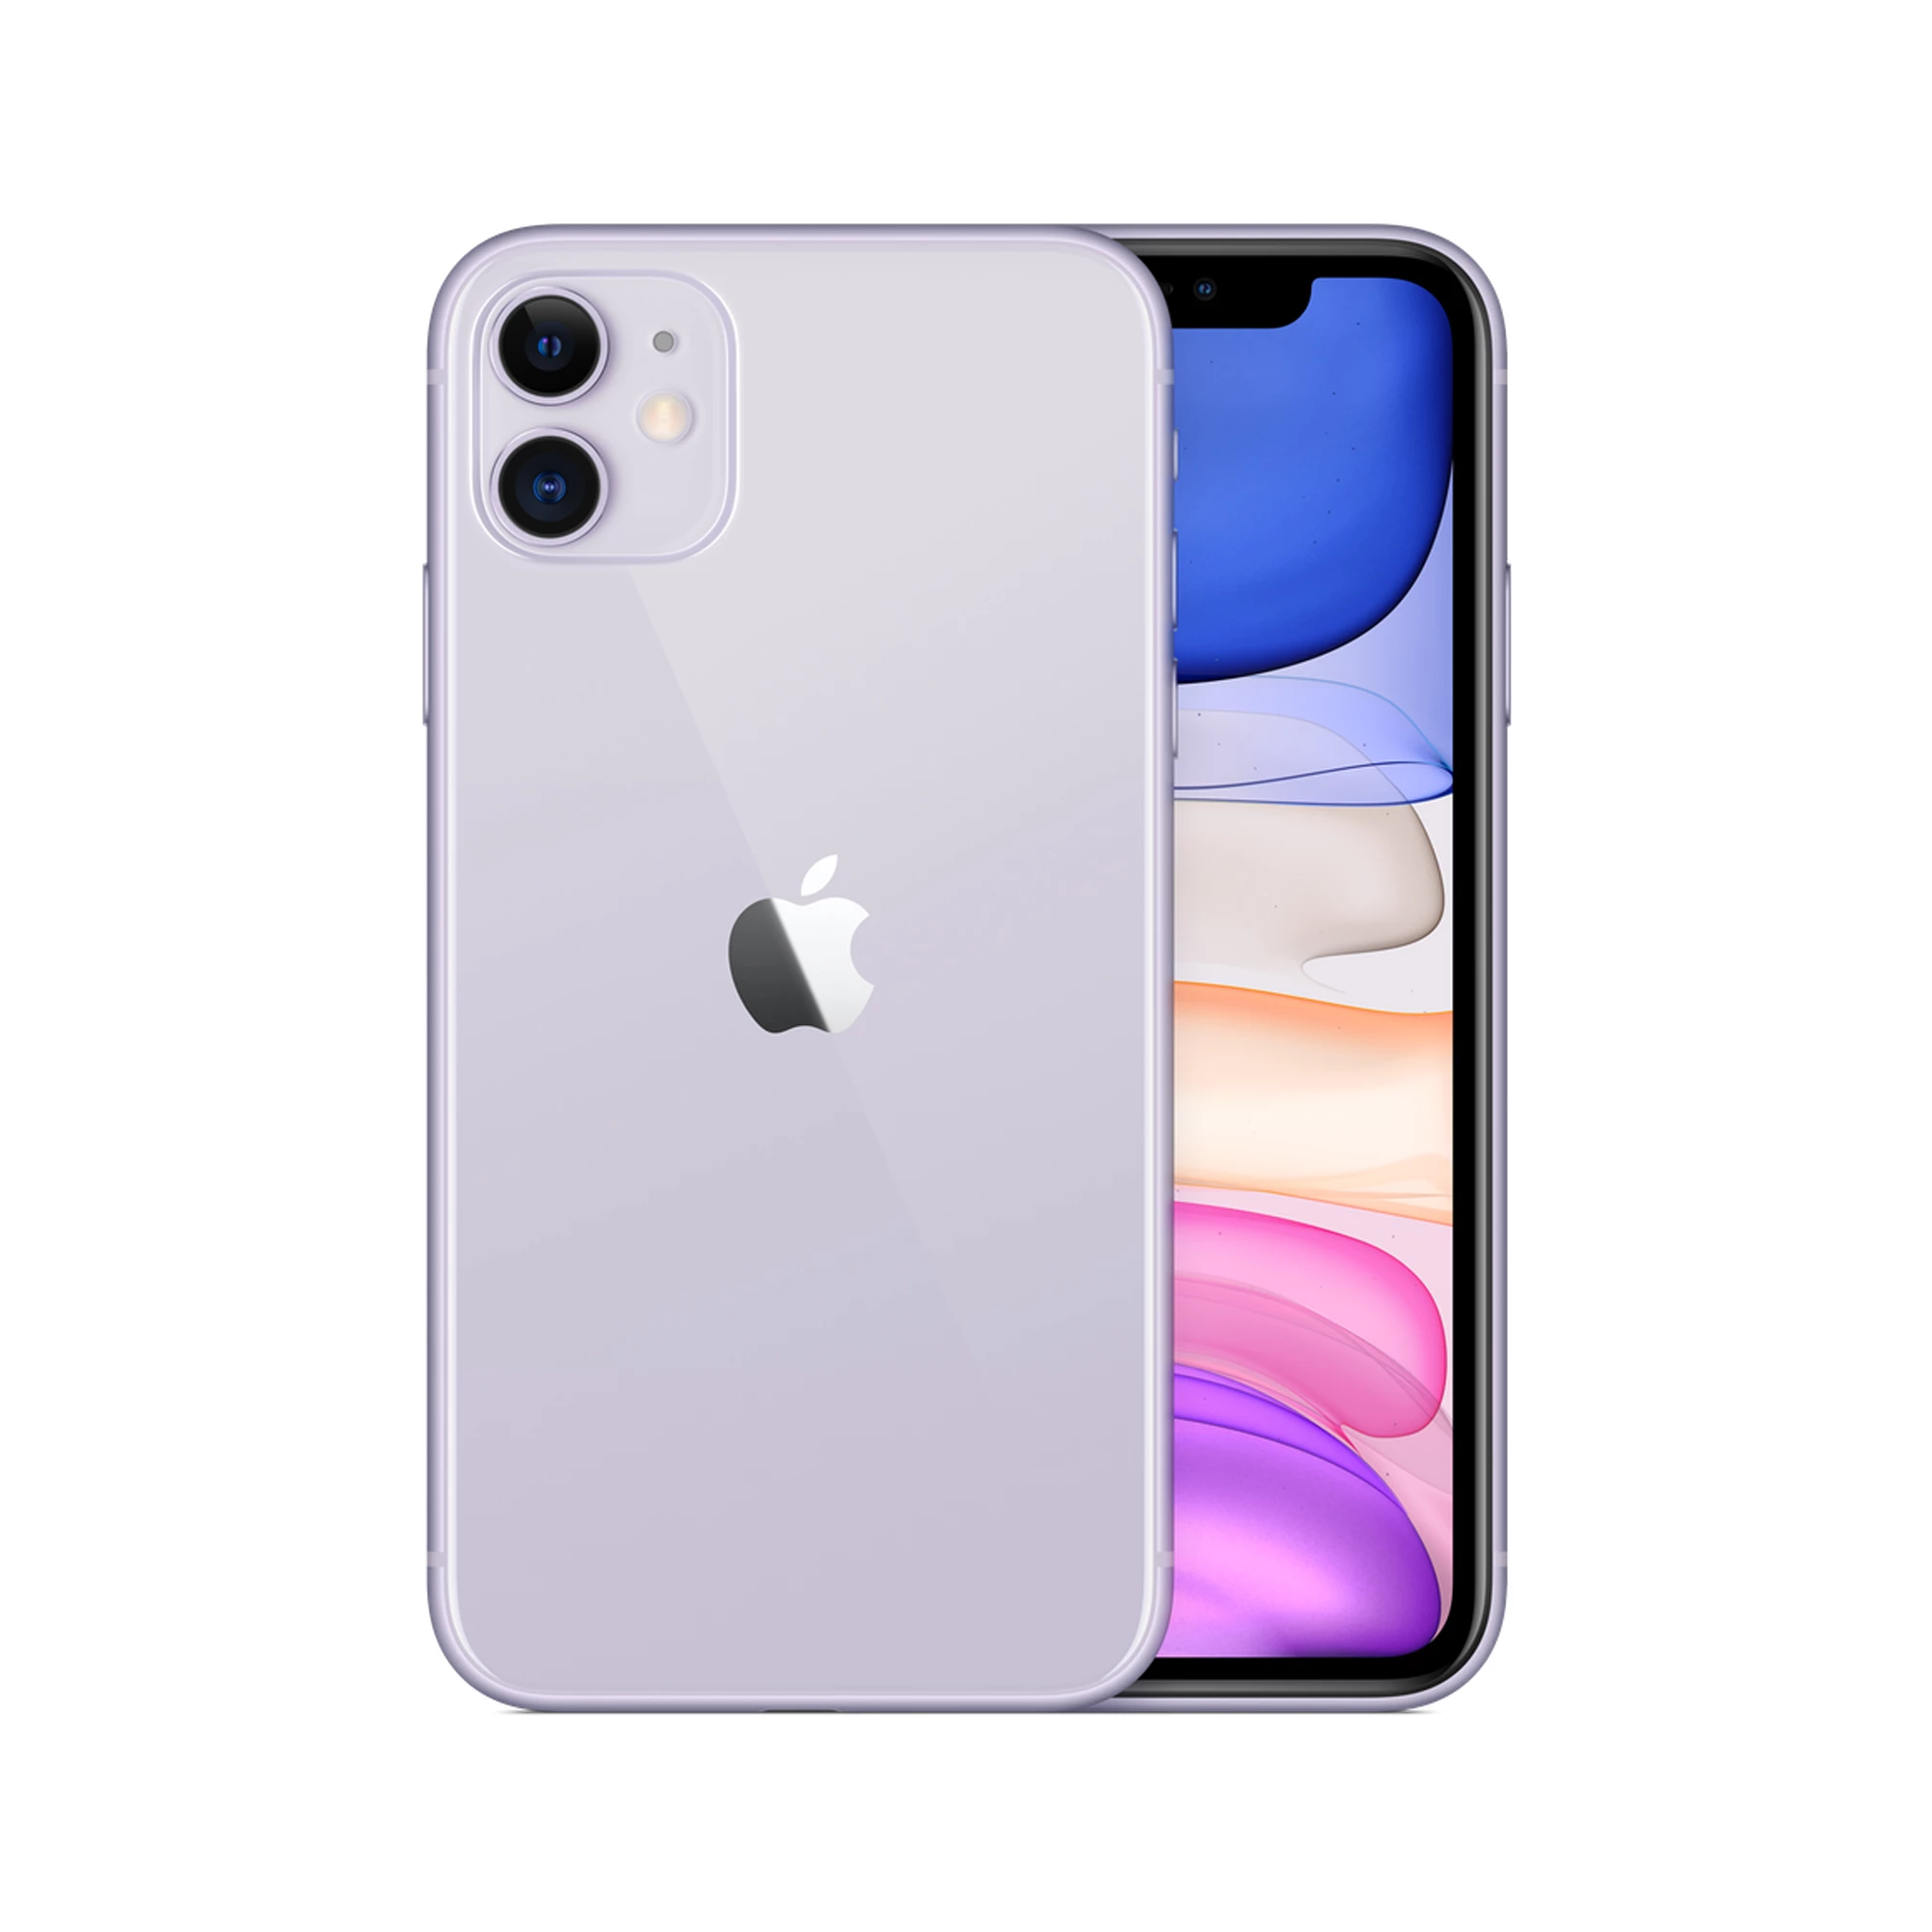 Apple iPhone 11 256GB Purple (MWLQ2) Full Box